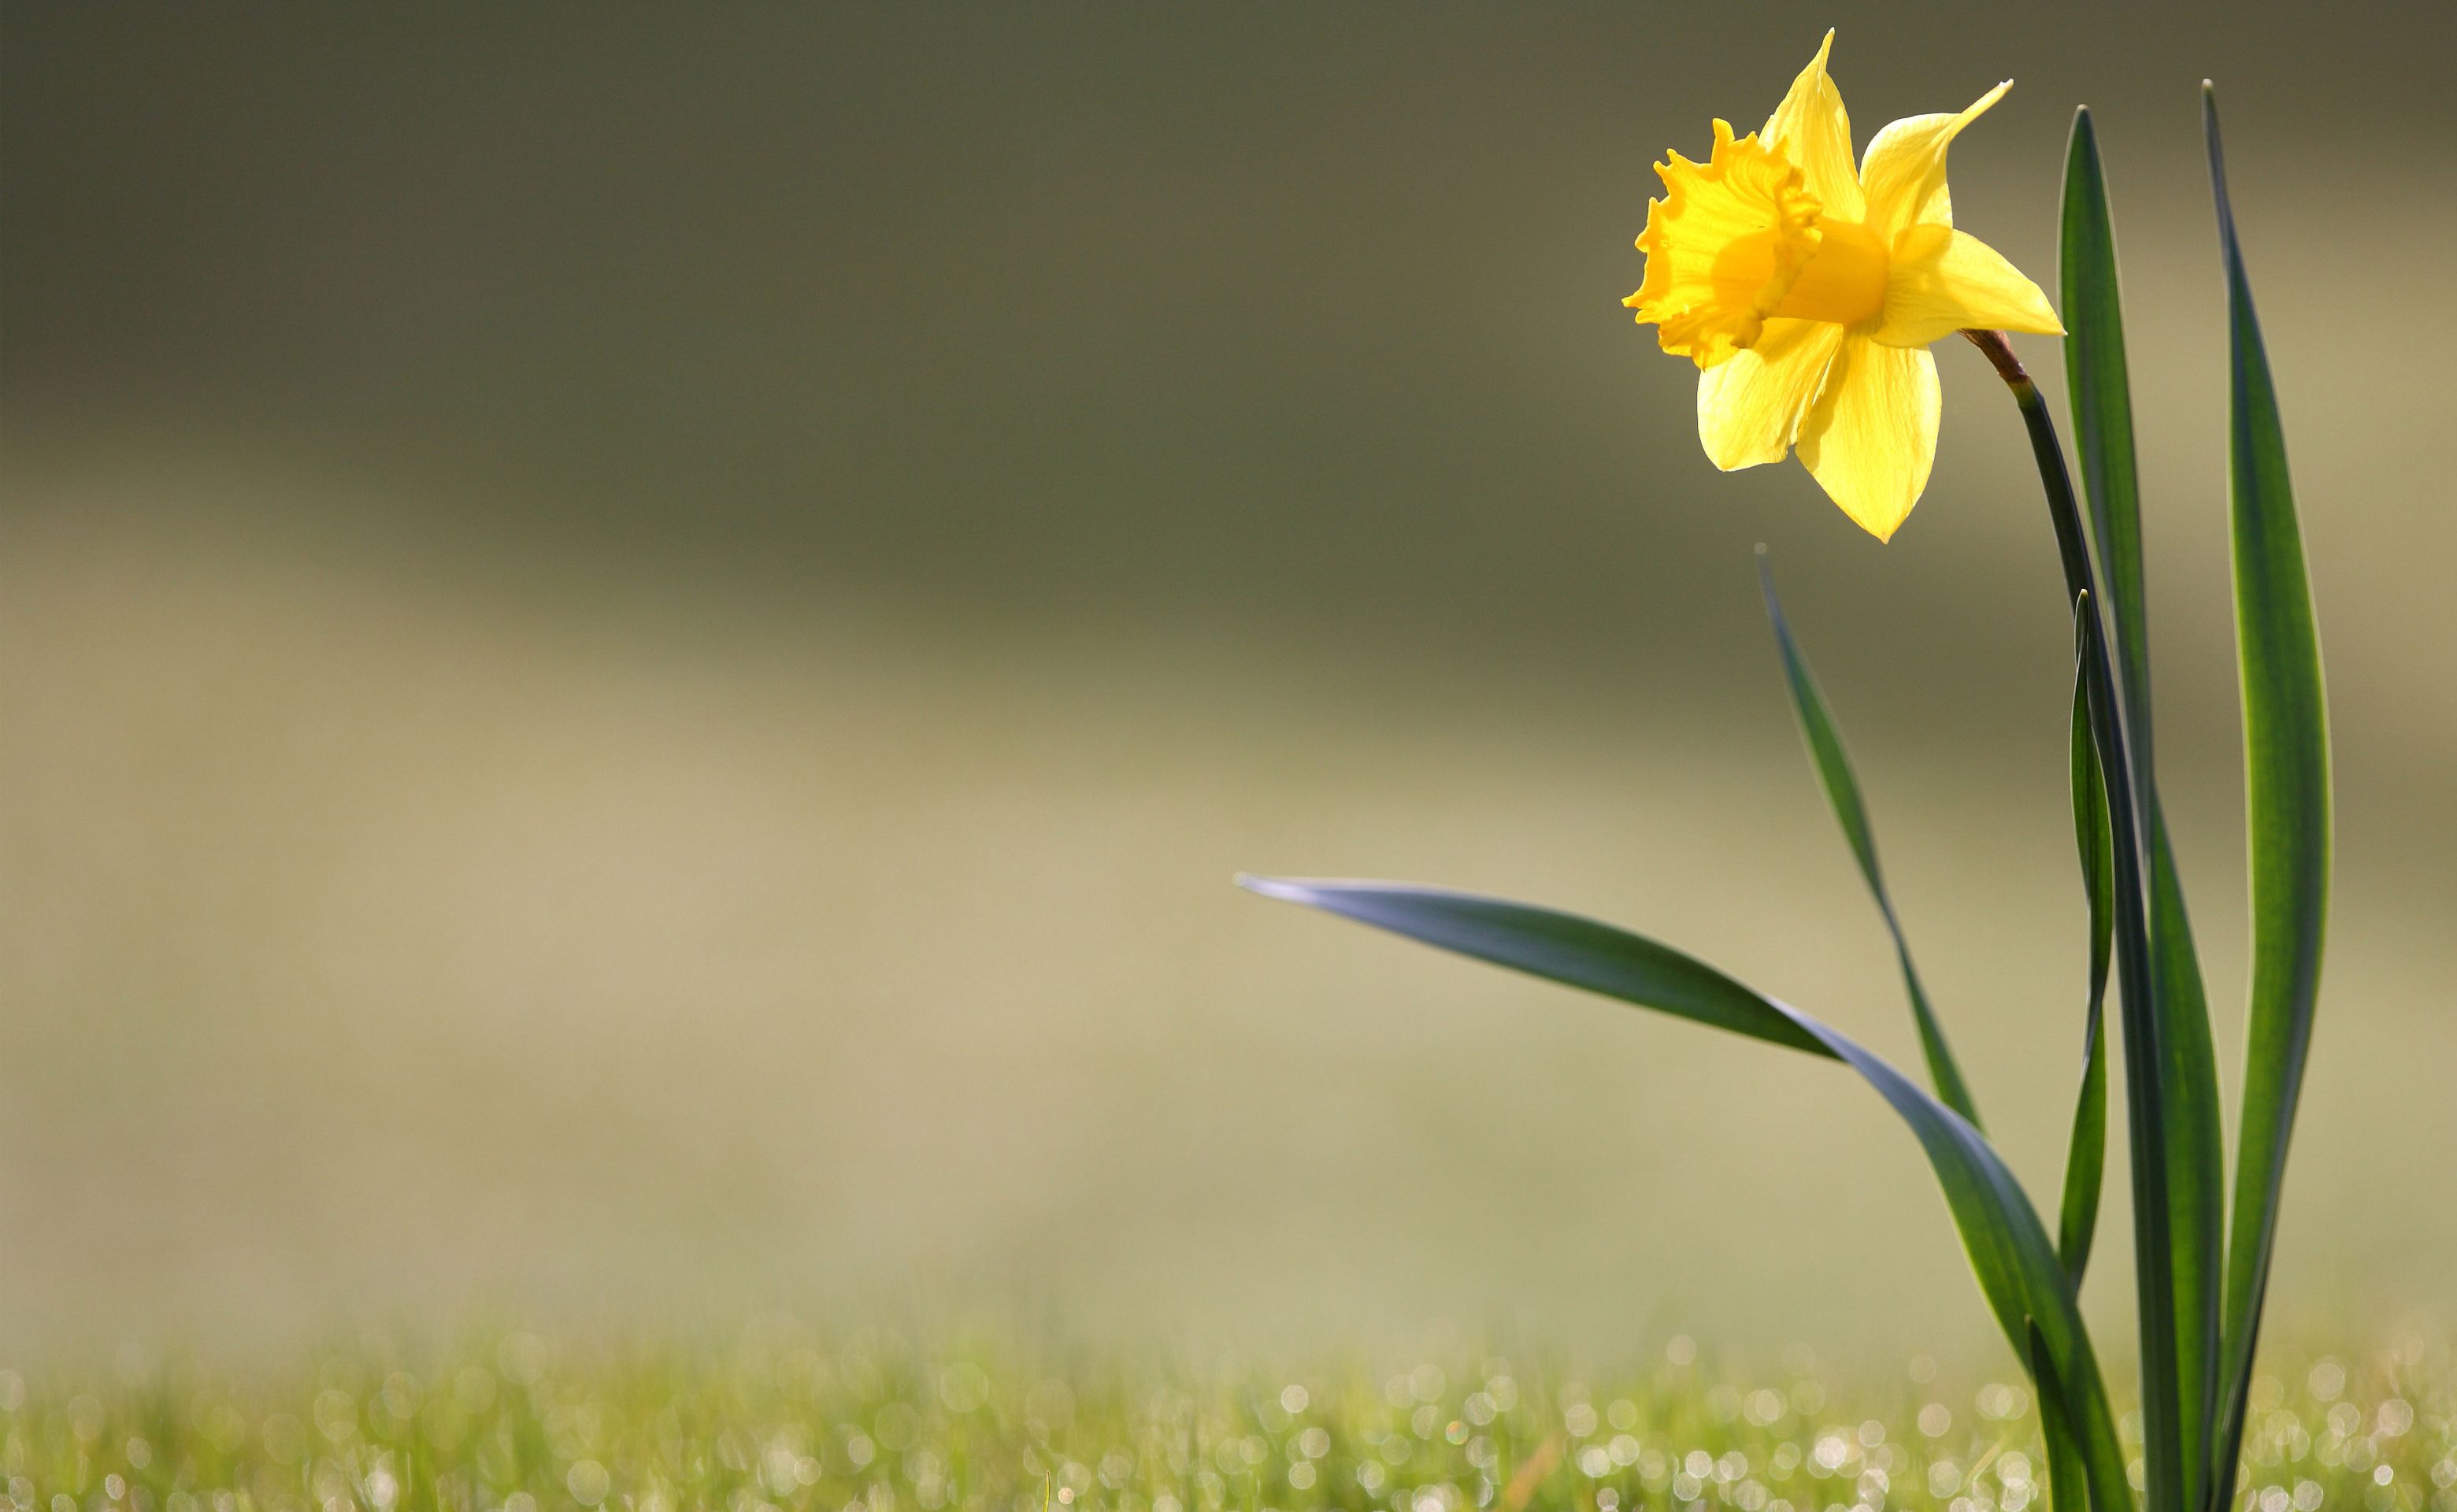 Daffodils Background. Field Daffodils